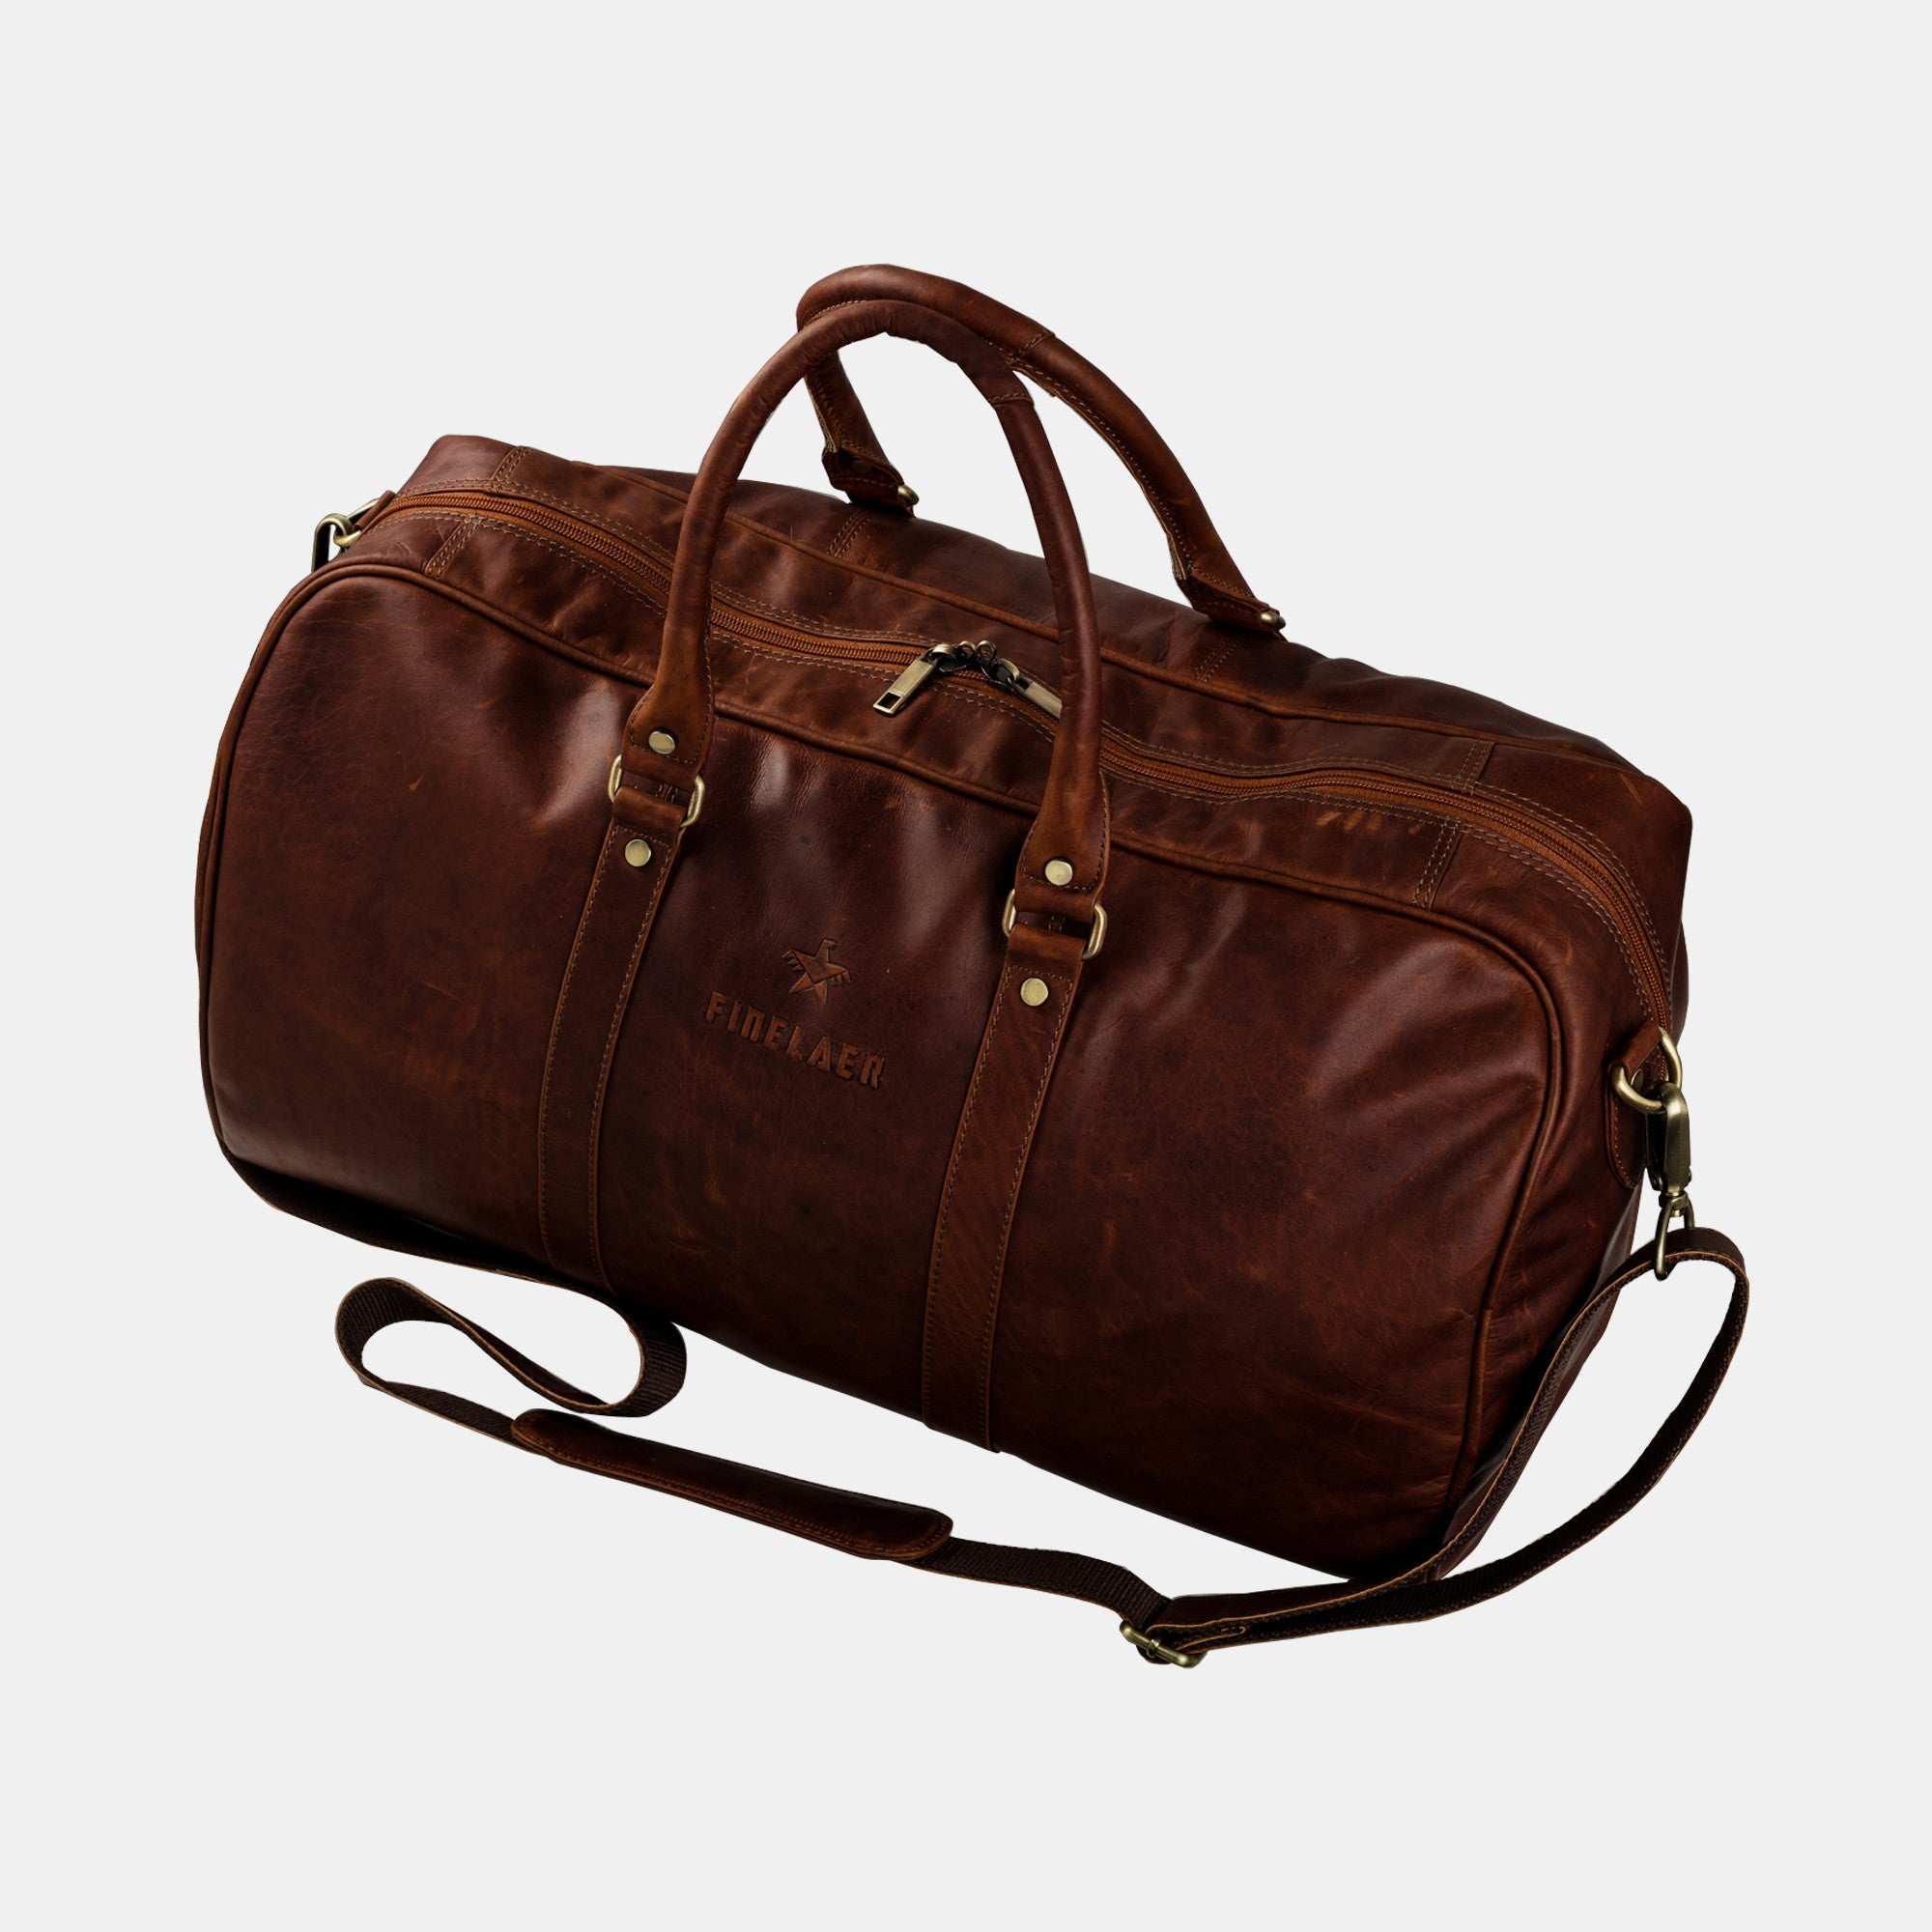 Shop Premium Leather Travel Duffle Bag | Finelaer